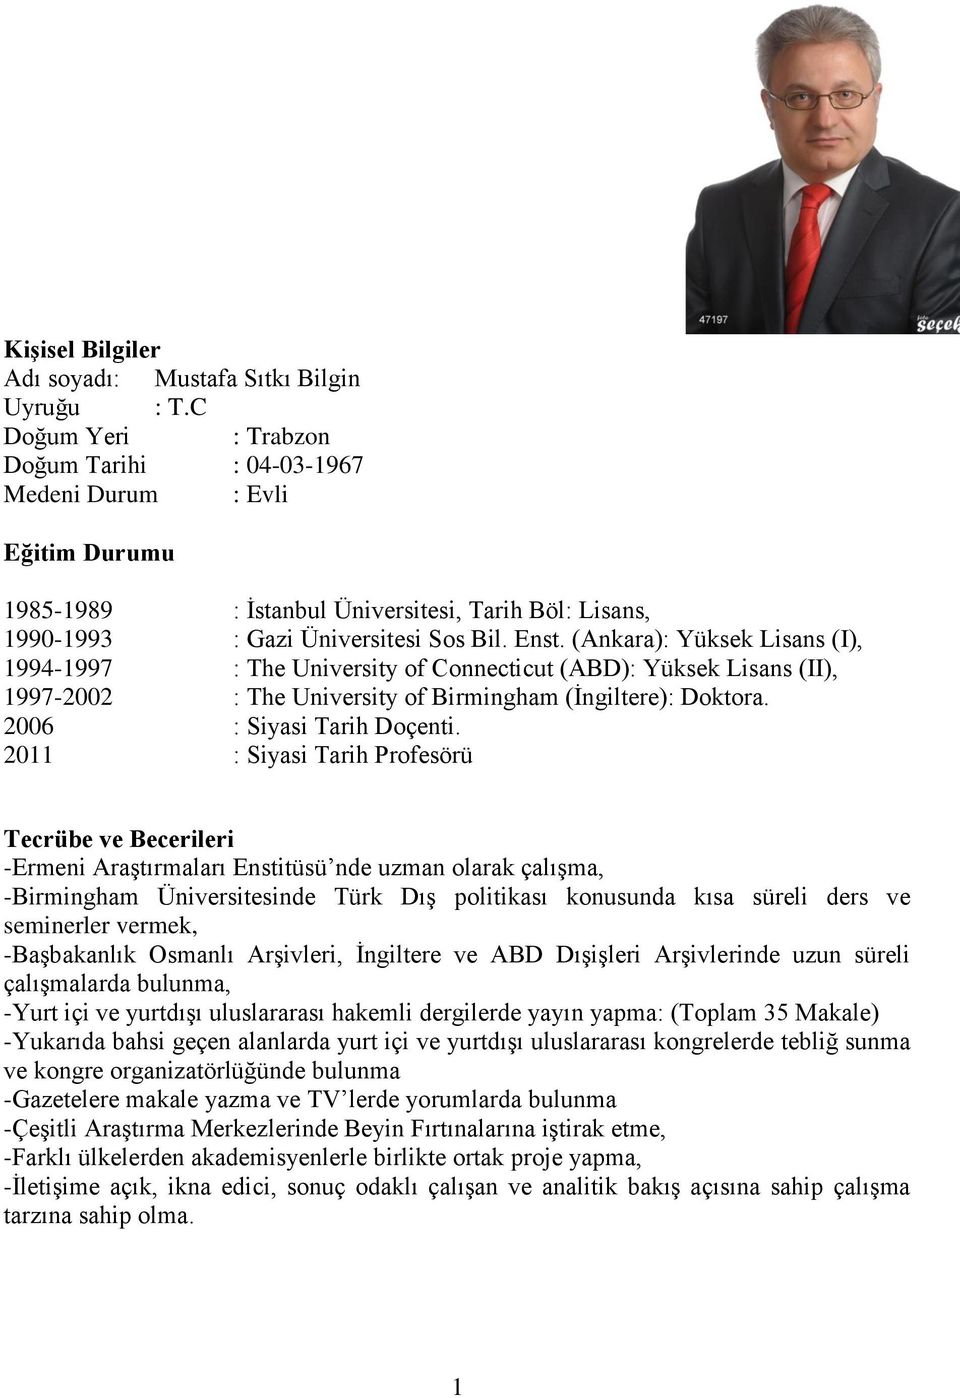 (Ankara): Yüksek Lisans (I), 1994-1997 : The University of Connecticut (ABD): Yüksek Lisans (II), 1997-2002 : The University of Birmingham (İngiltere): Doktora. 2006 : Siyasi Tarih Doçenti.